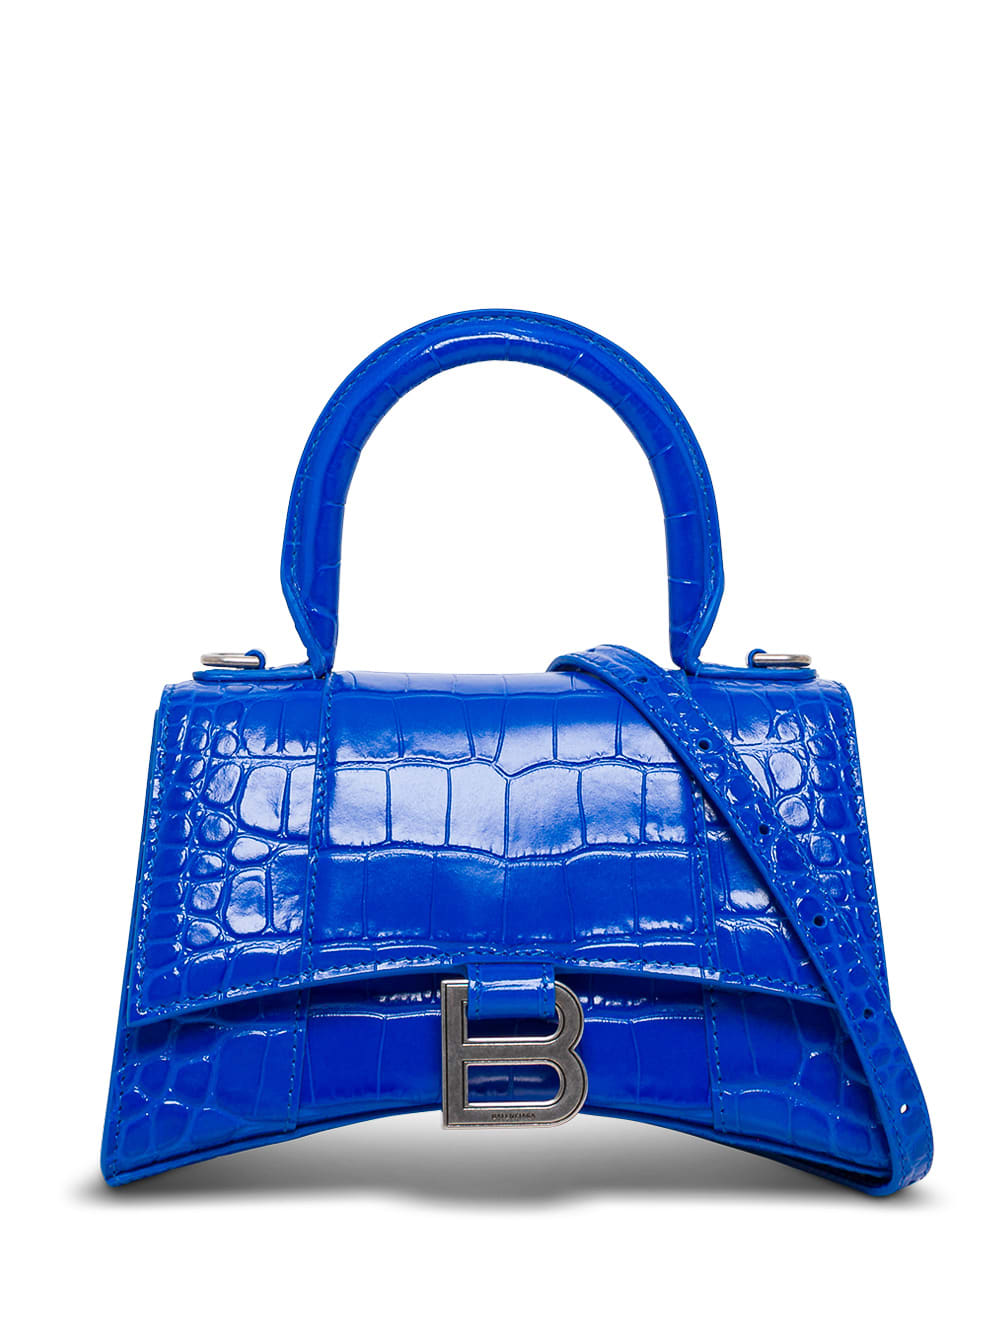 Balenciaga Hourglass Crossbody Bag In Blue Crocodile Printed Leather